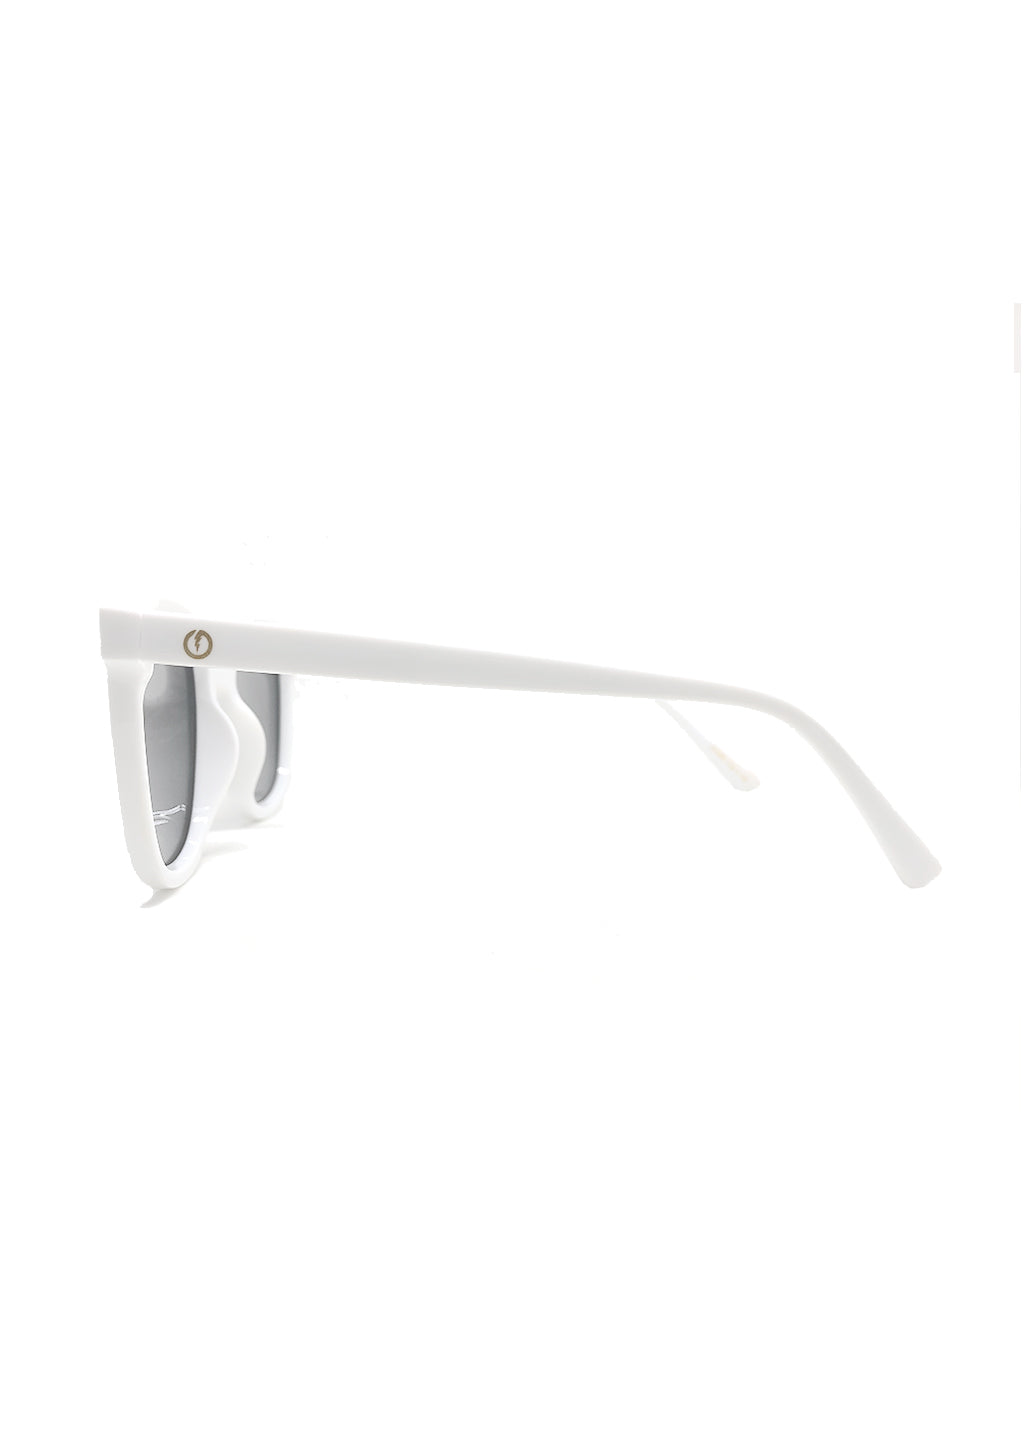 Lotus Wayfarer sunglasses - Details